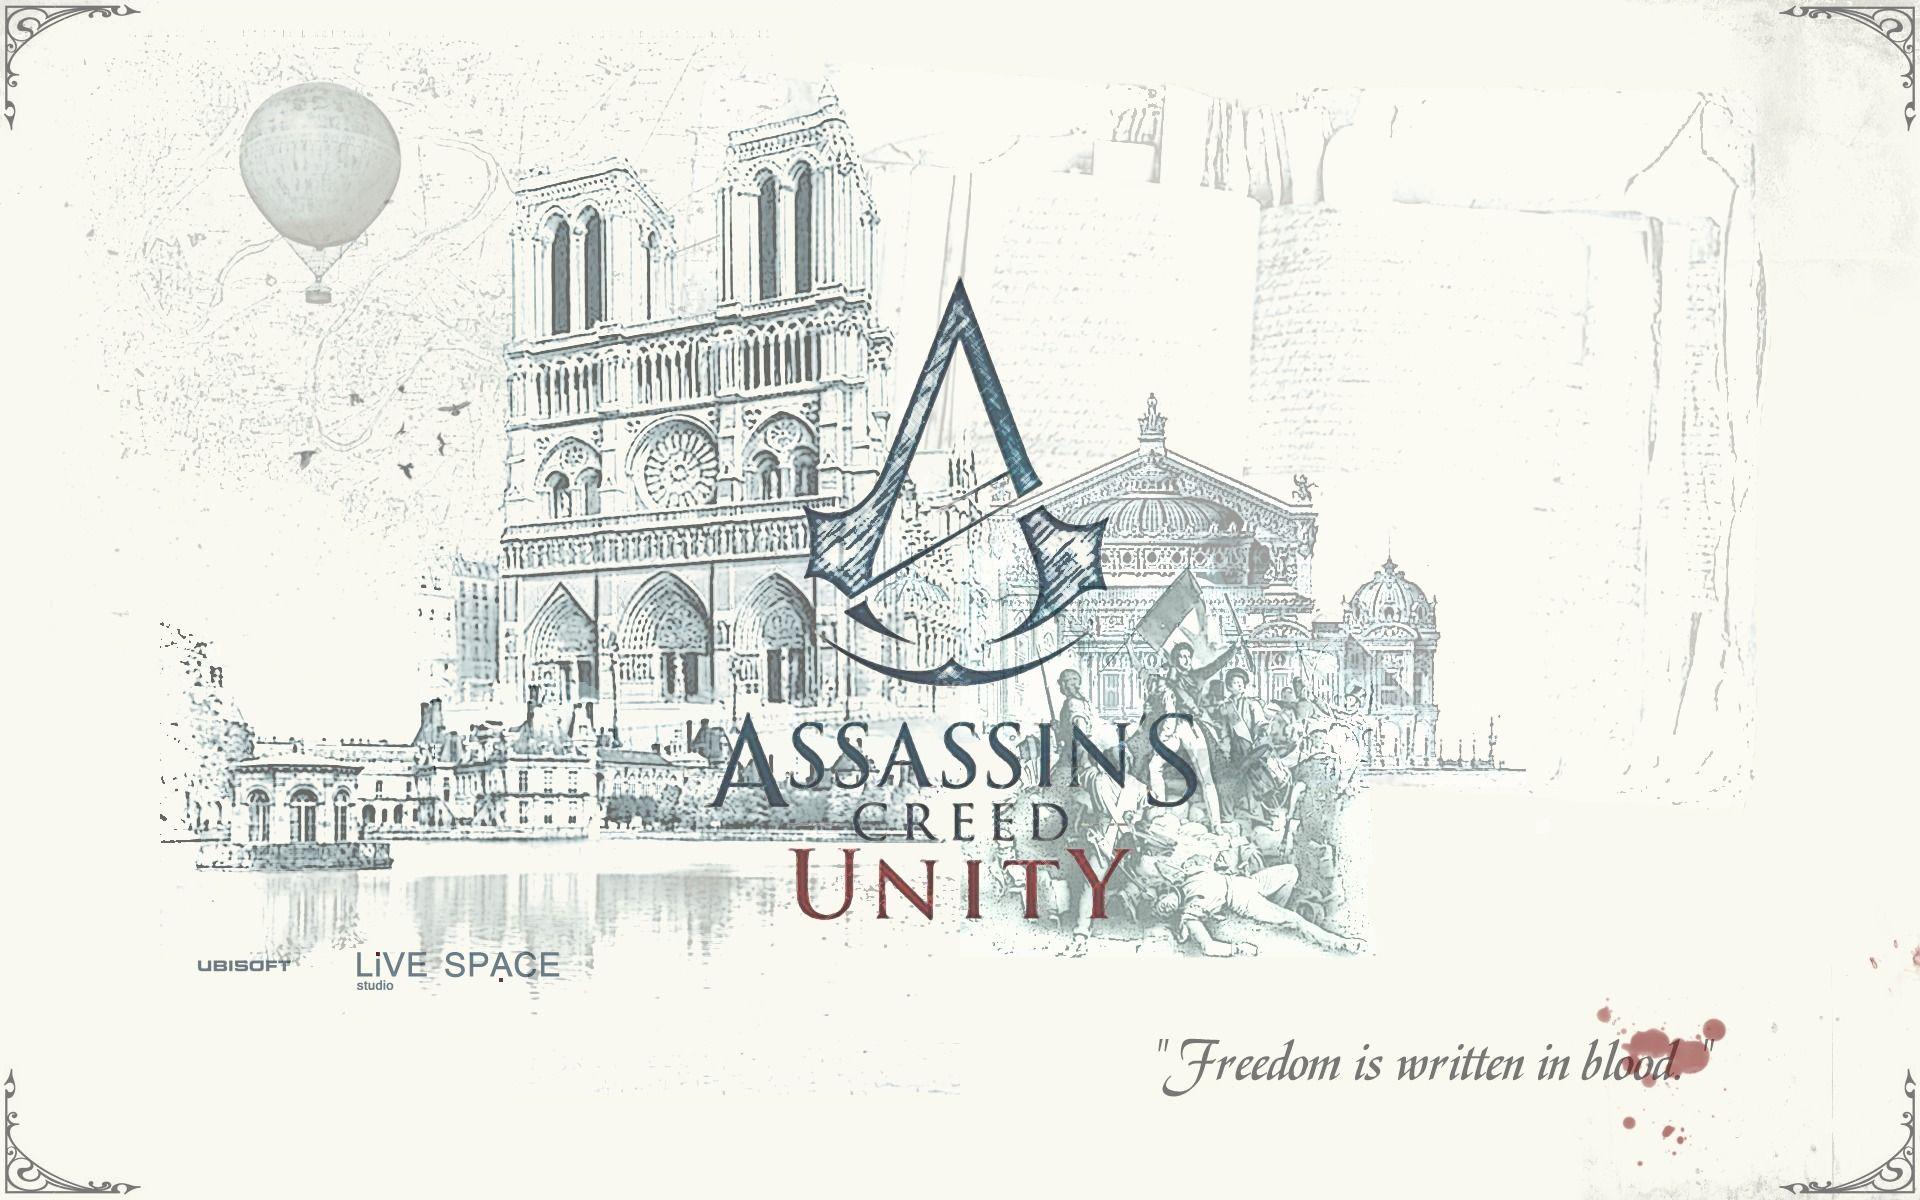 Assassins creed unity symbol